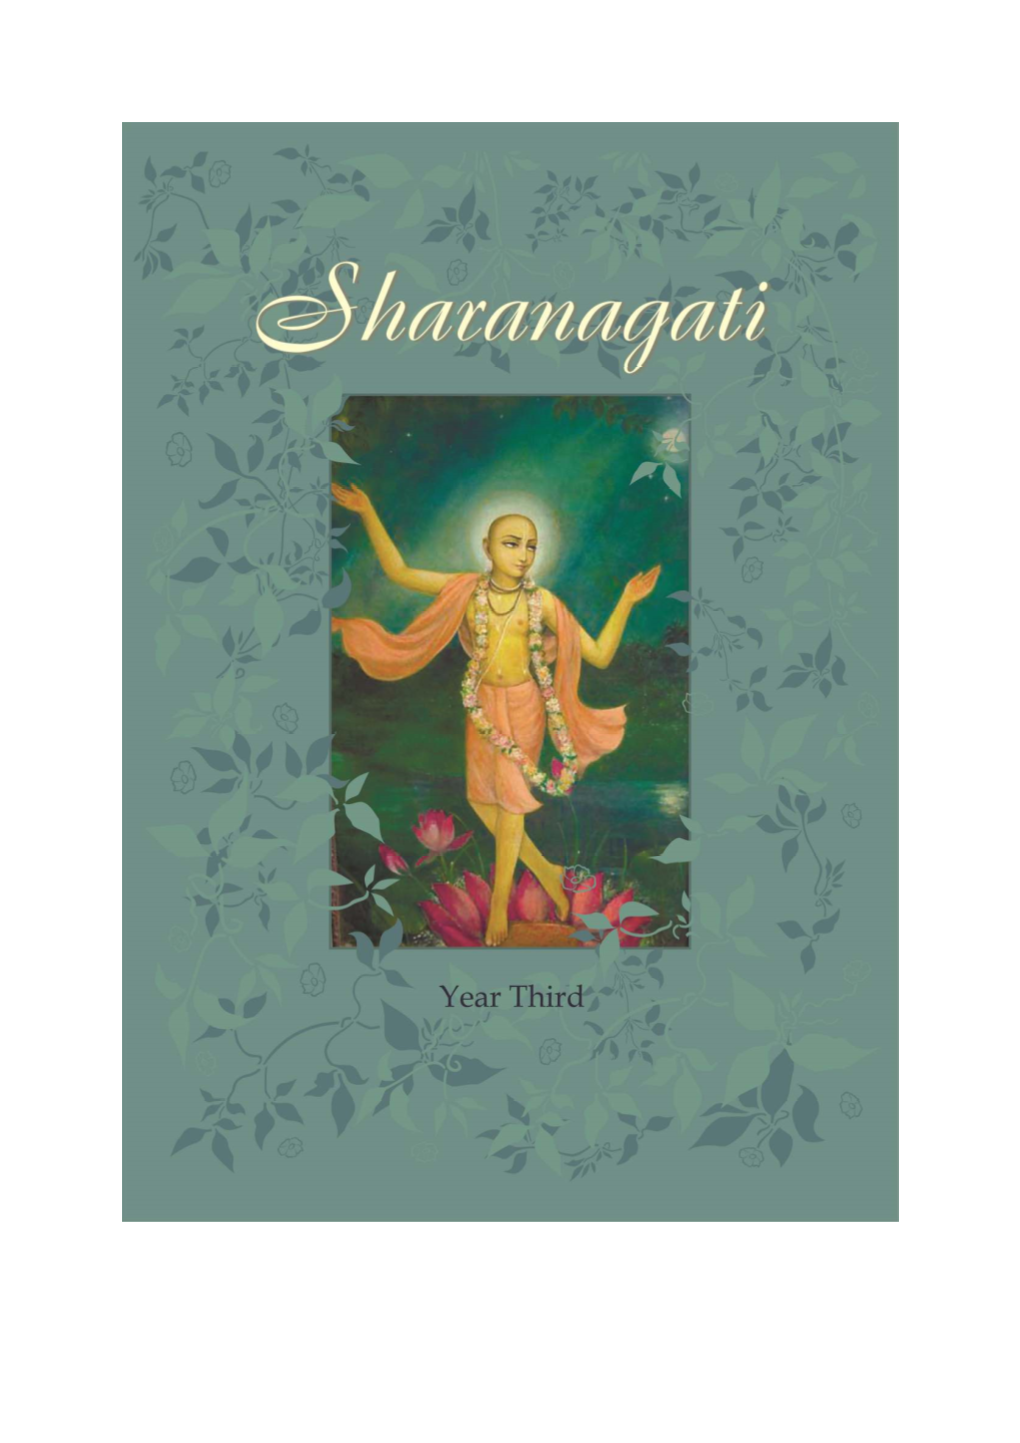 Sharanagati, Year Third